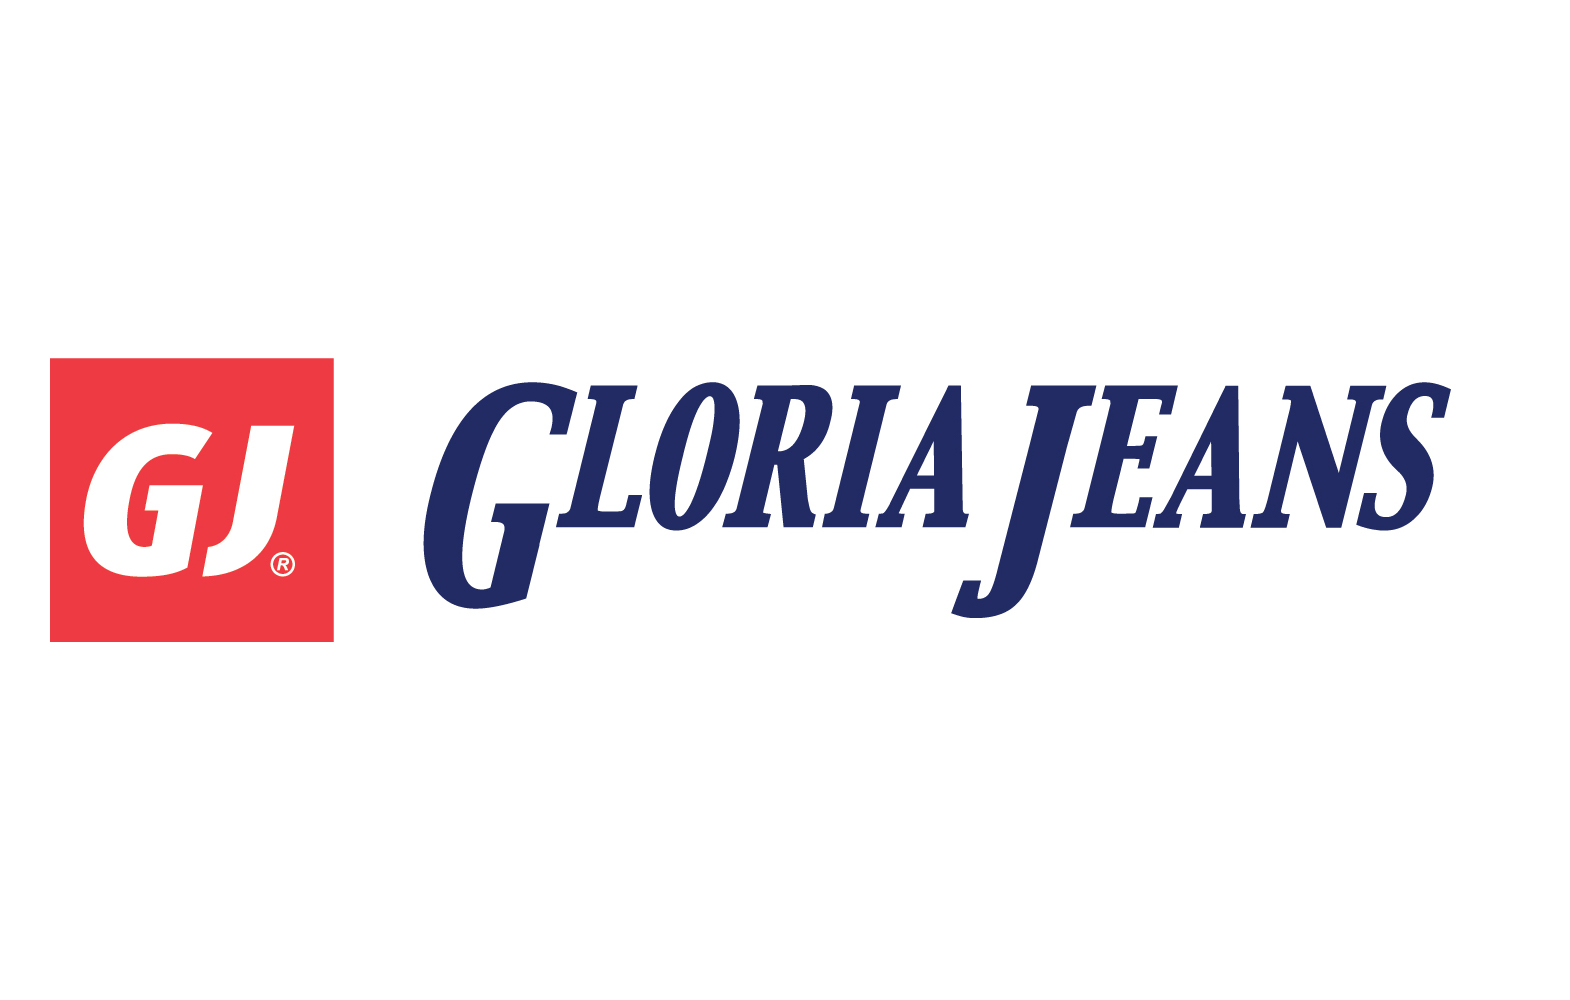  . - 50%!  09.03! Gloria Jeans!  ! ,  , , , !   04/22